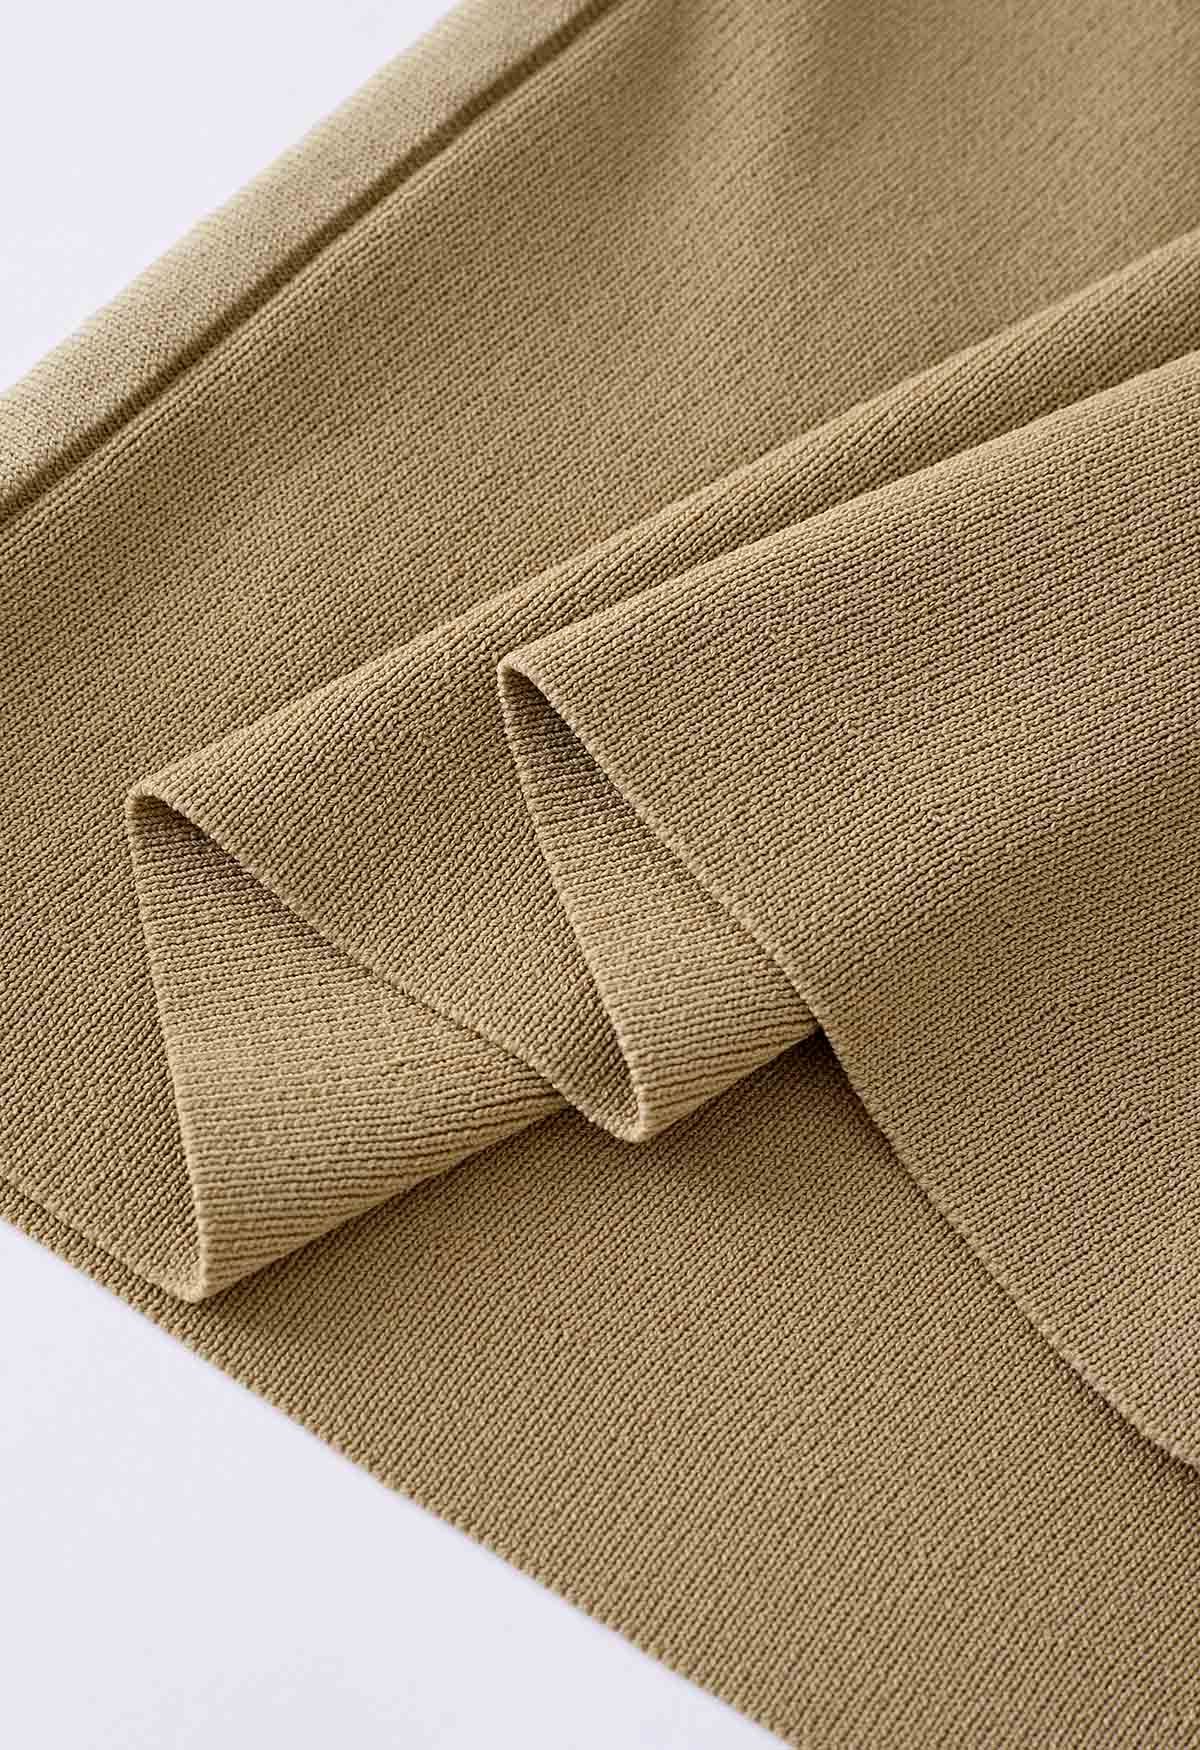 One-Shoulder Side Drawstring Knit Top in Tan